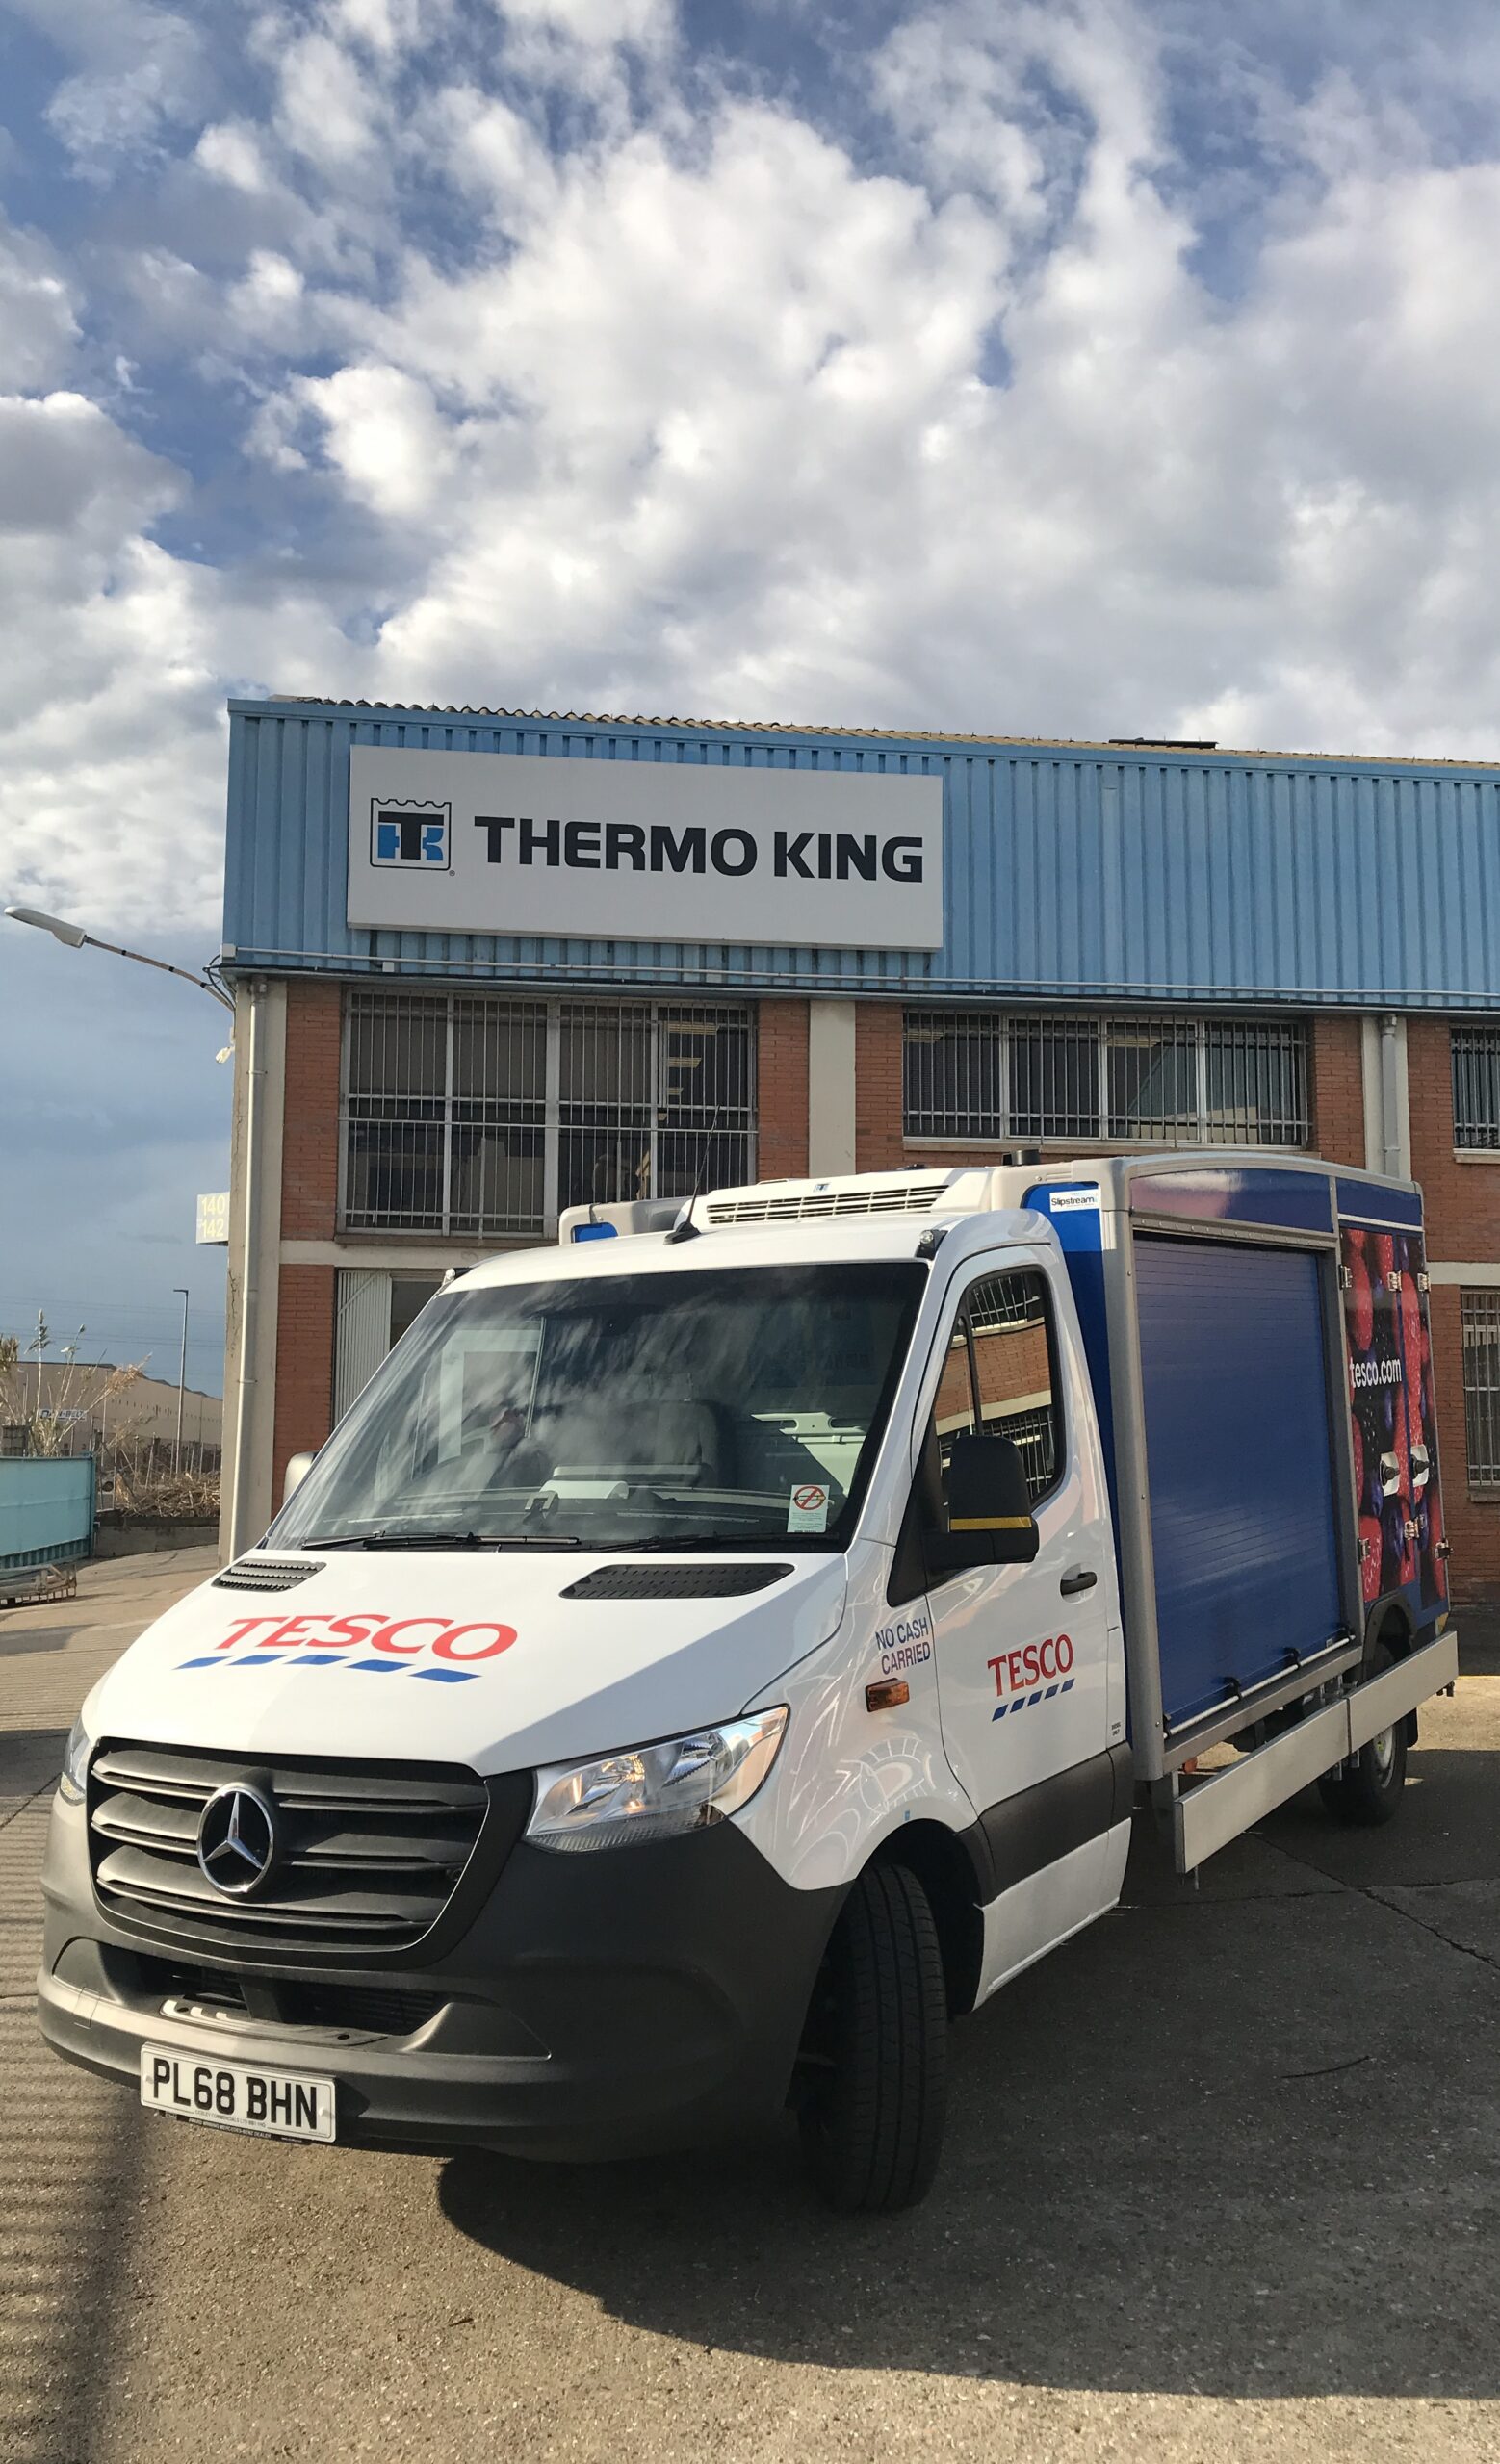 Tesco Dot-Com-wagenpark wint aan operationele flexibiliteit met Thermo King’s E-200 elektrische koelunits